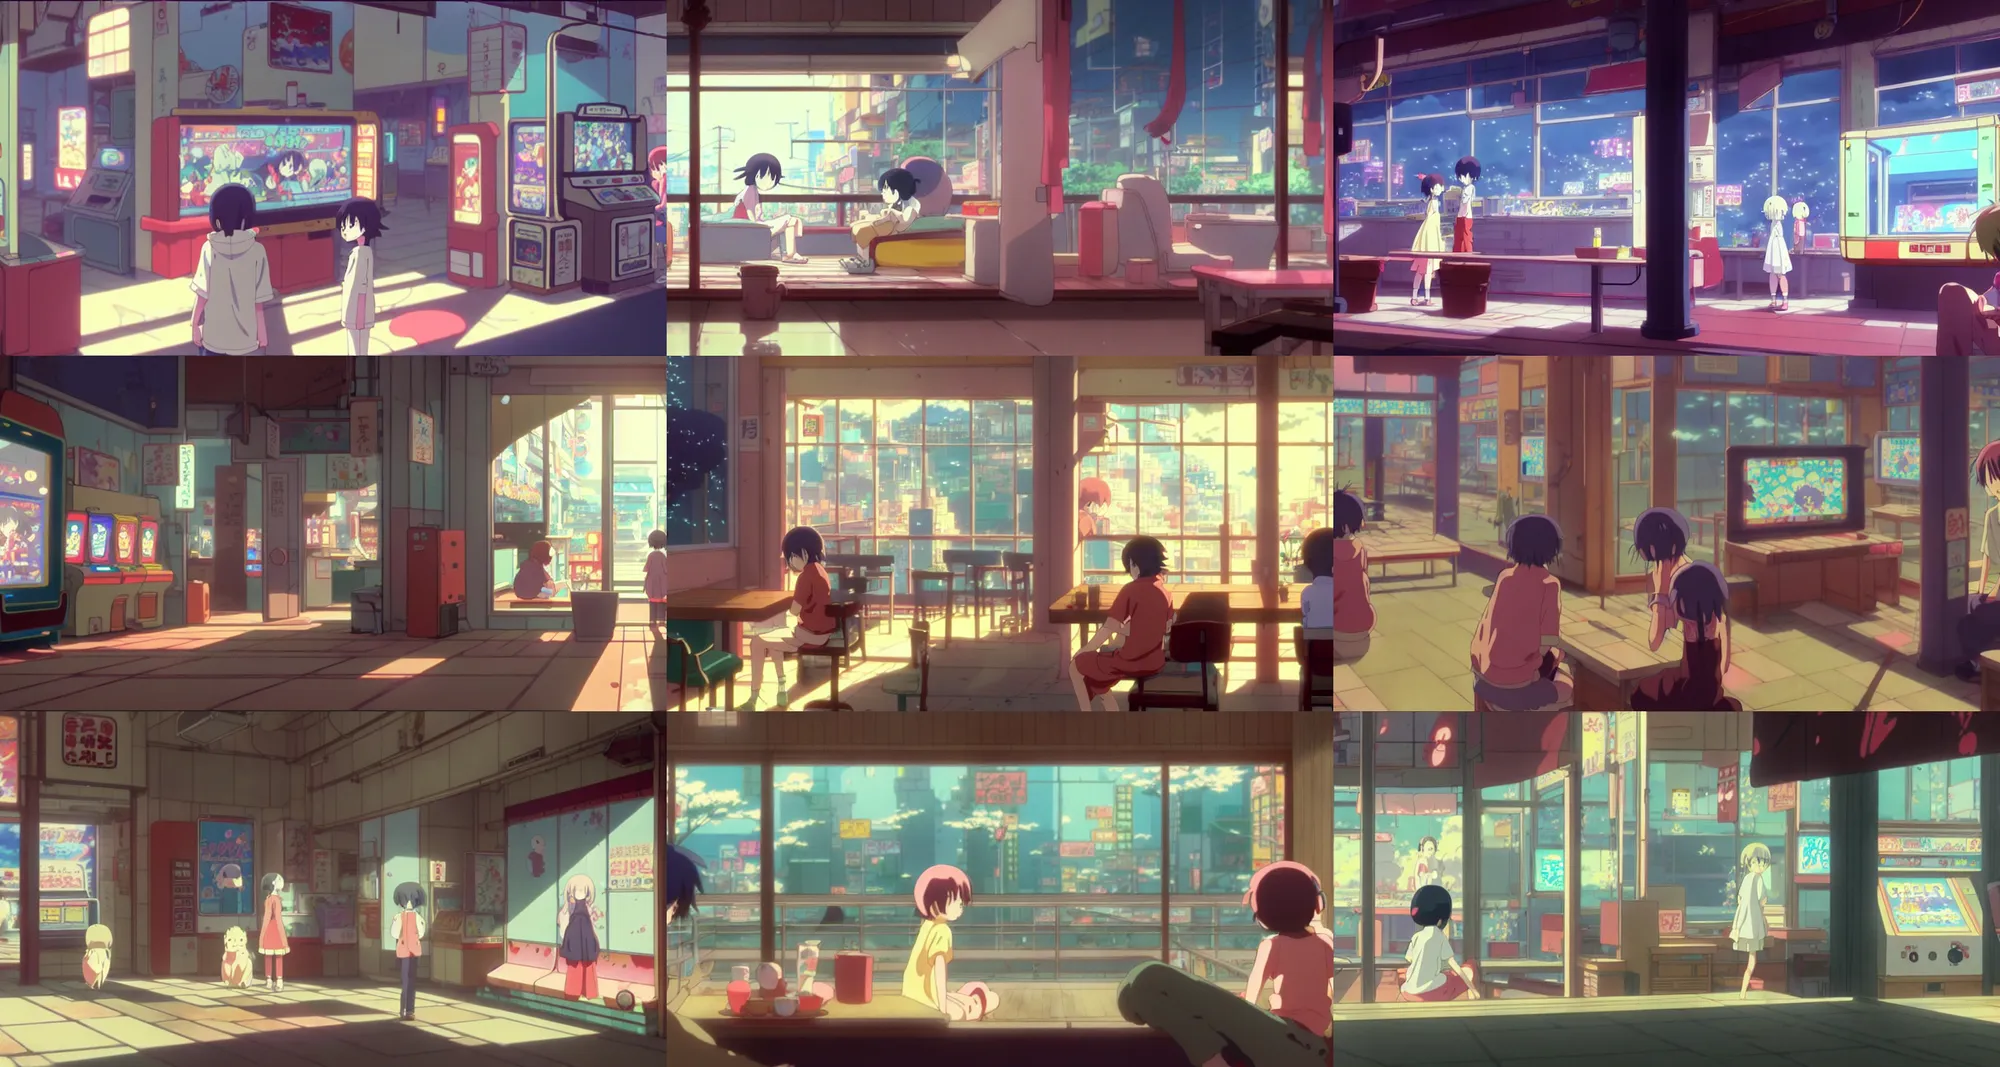 Prompt: beautiful slice of life anime scene of video game arcade, inside, happy, relaxing, calm, cozy, peaceful, by mamoru hosoda, hayao miyazaki, makoto shinkai